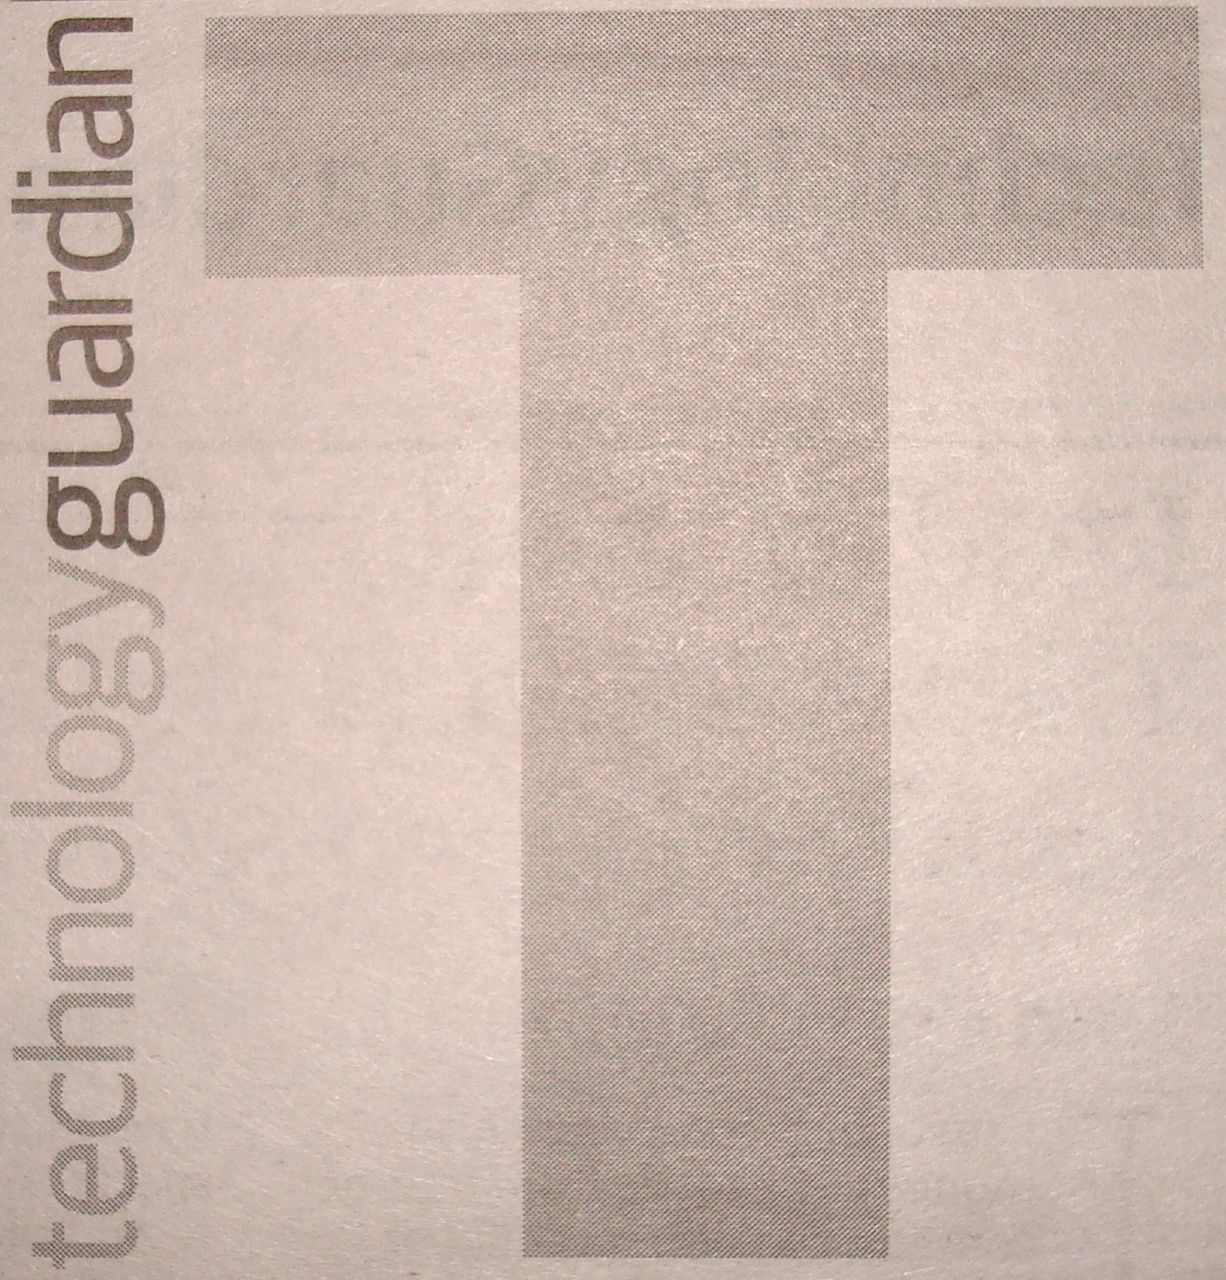 Scan of Technology Guardian logo